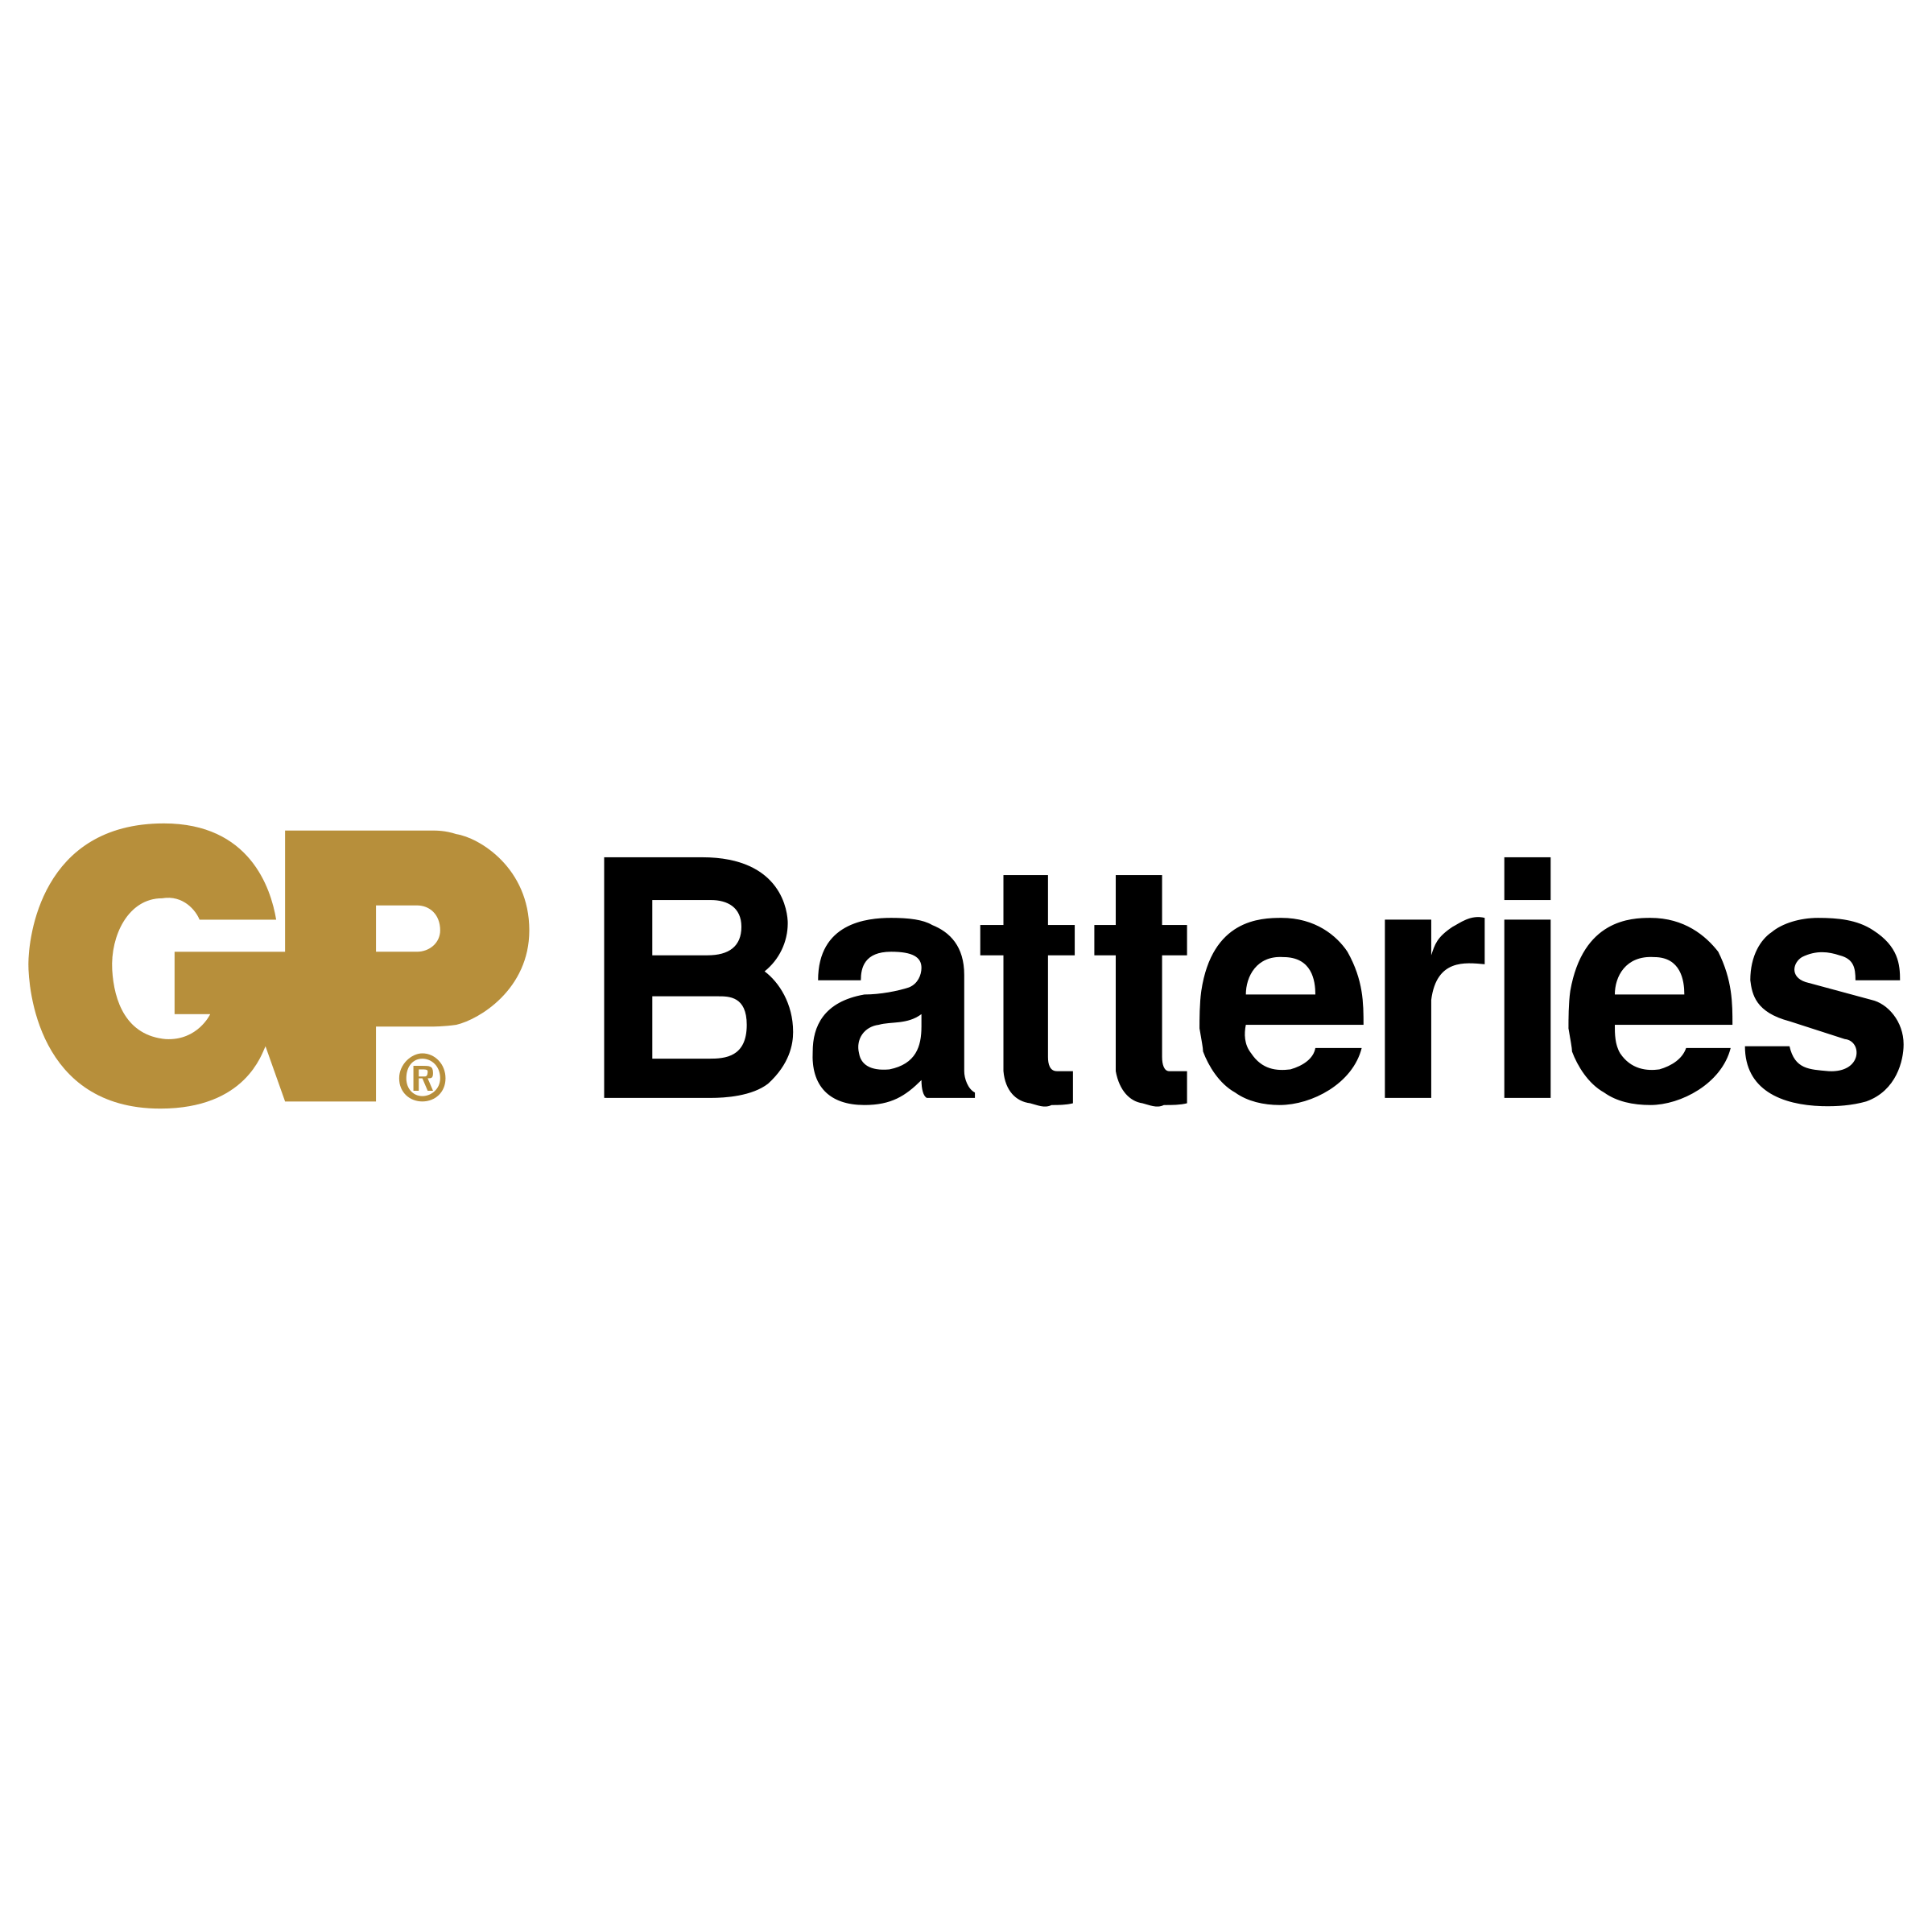 Batteries.com Logo - GP Batteries Logo PNG Transparent & SVG Vector